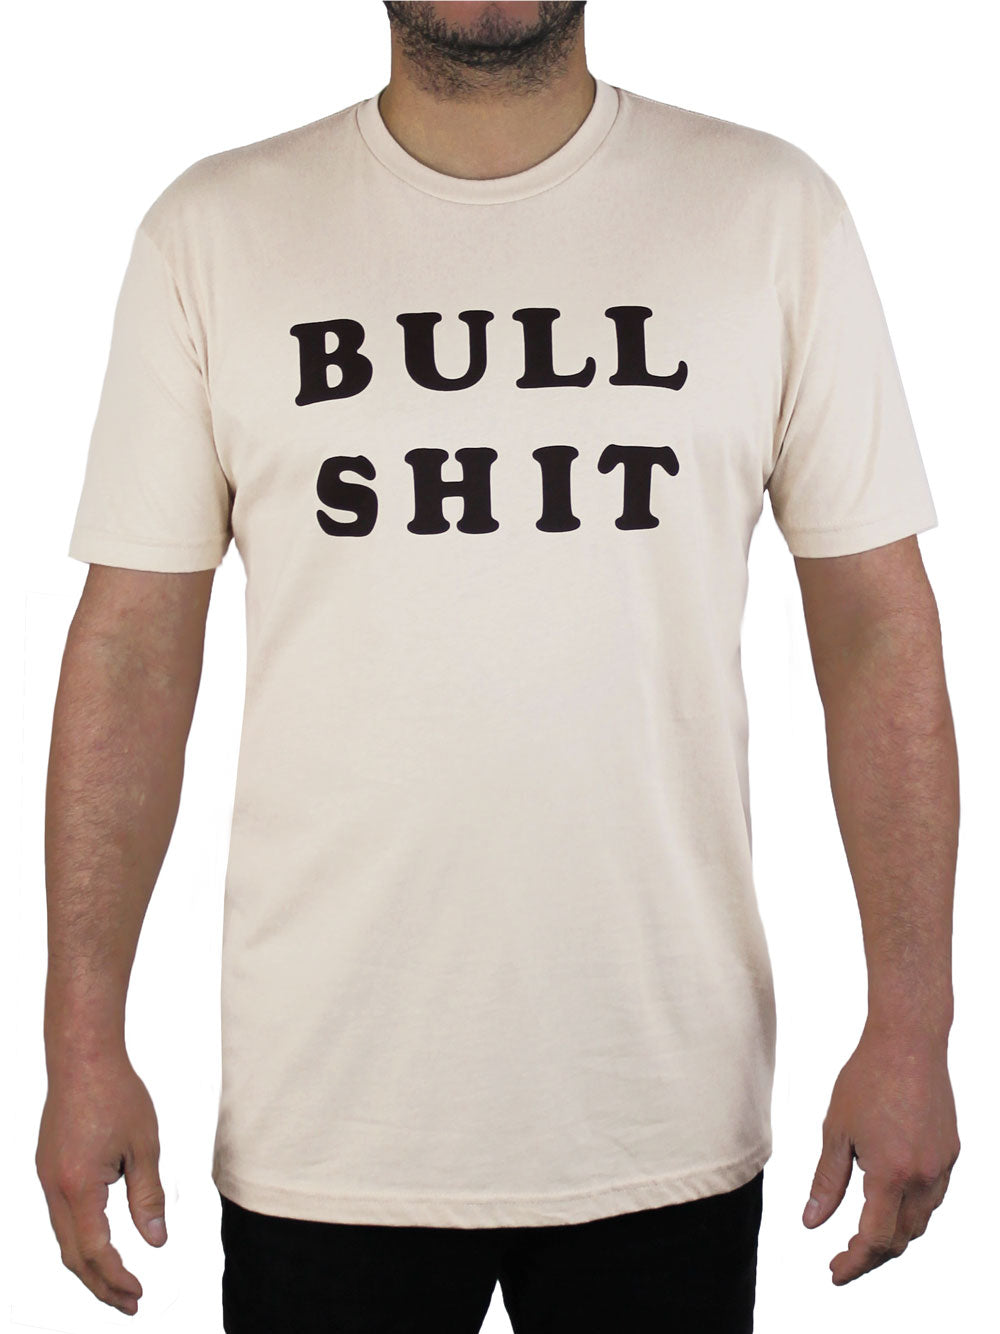 Bull Shit Shirt Front View